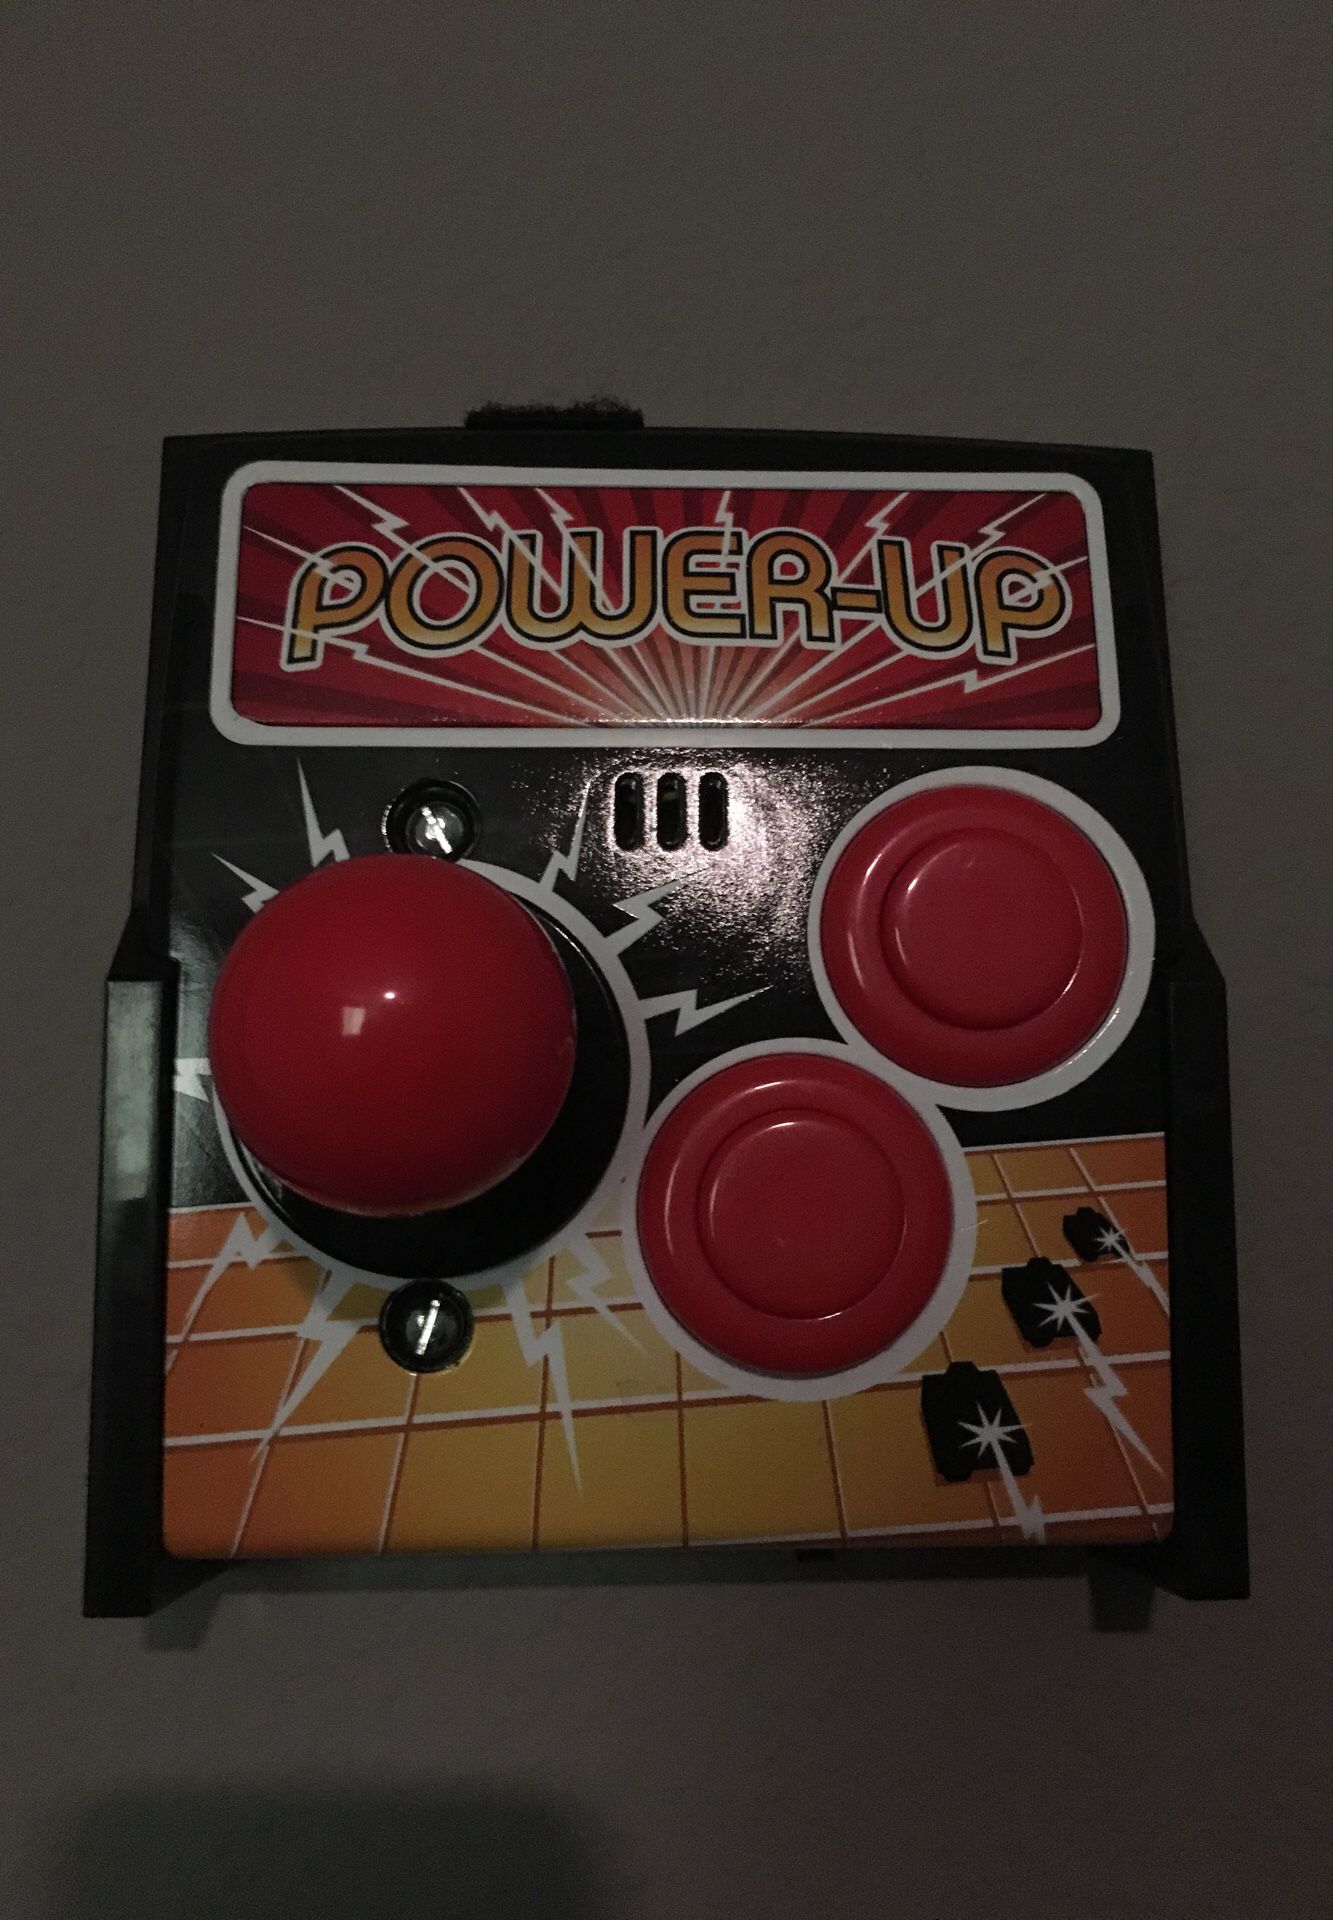 Power-up joystick light switch panel video game sounds arcade retro